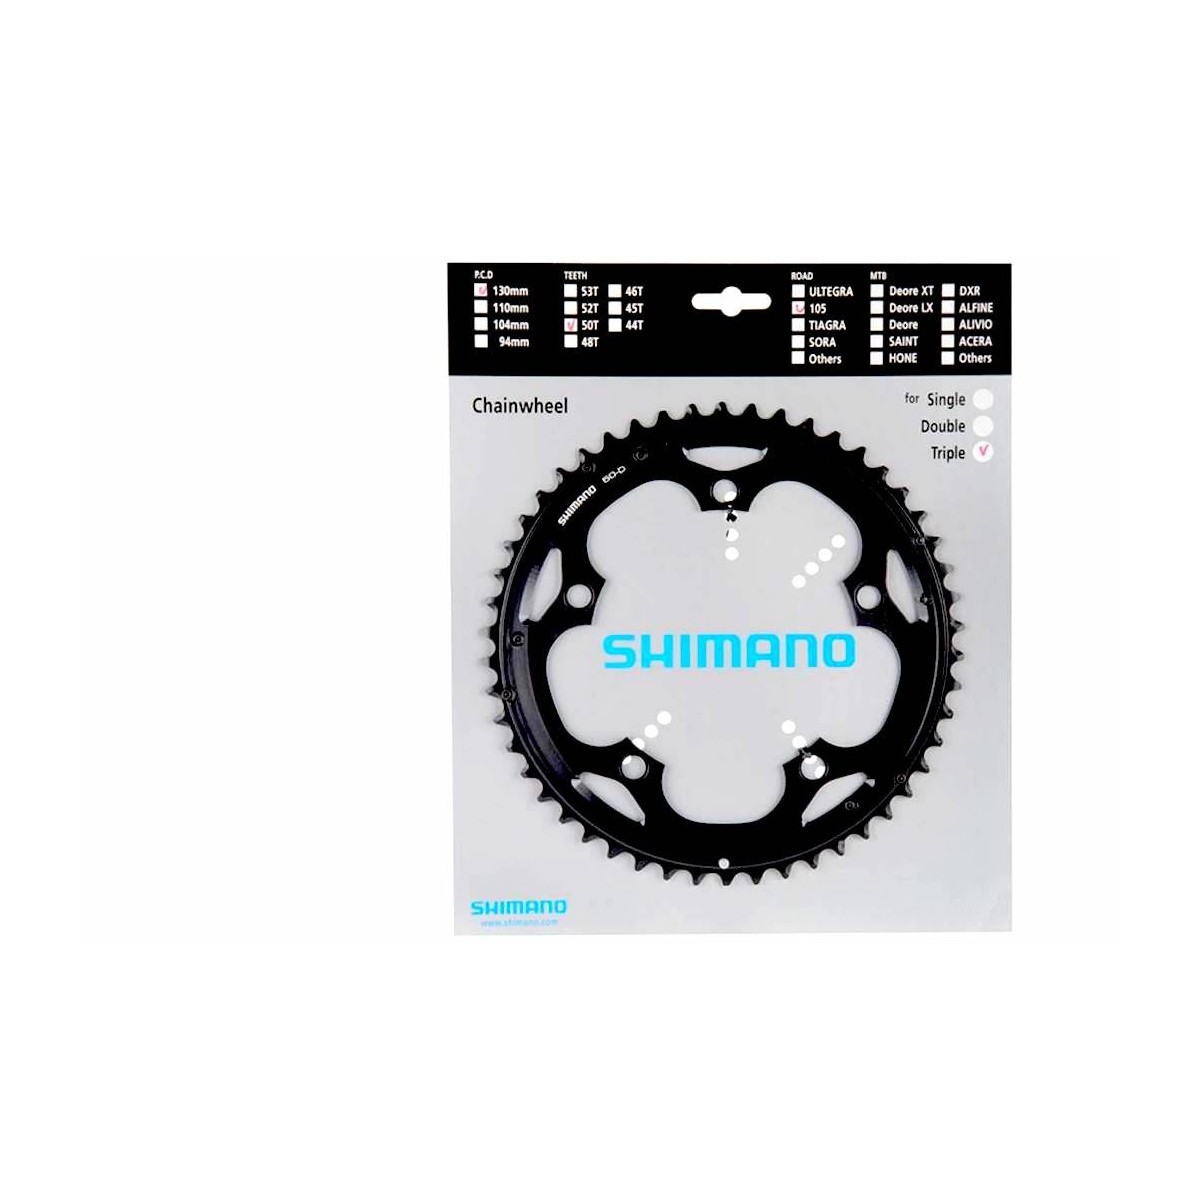 Road bike chainrings Shimano 105 FC-5703 50T-D